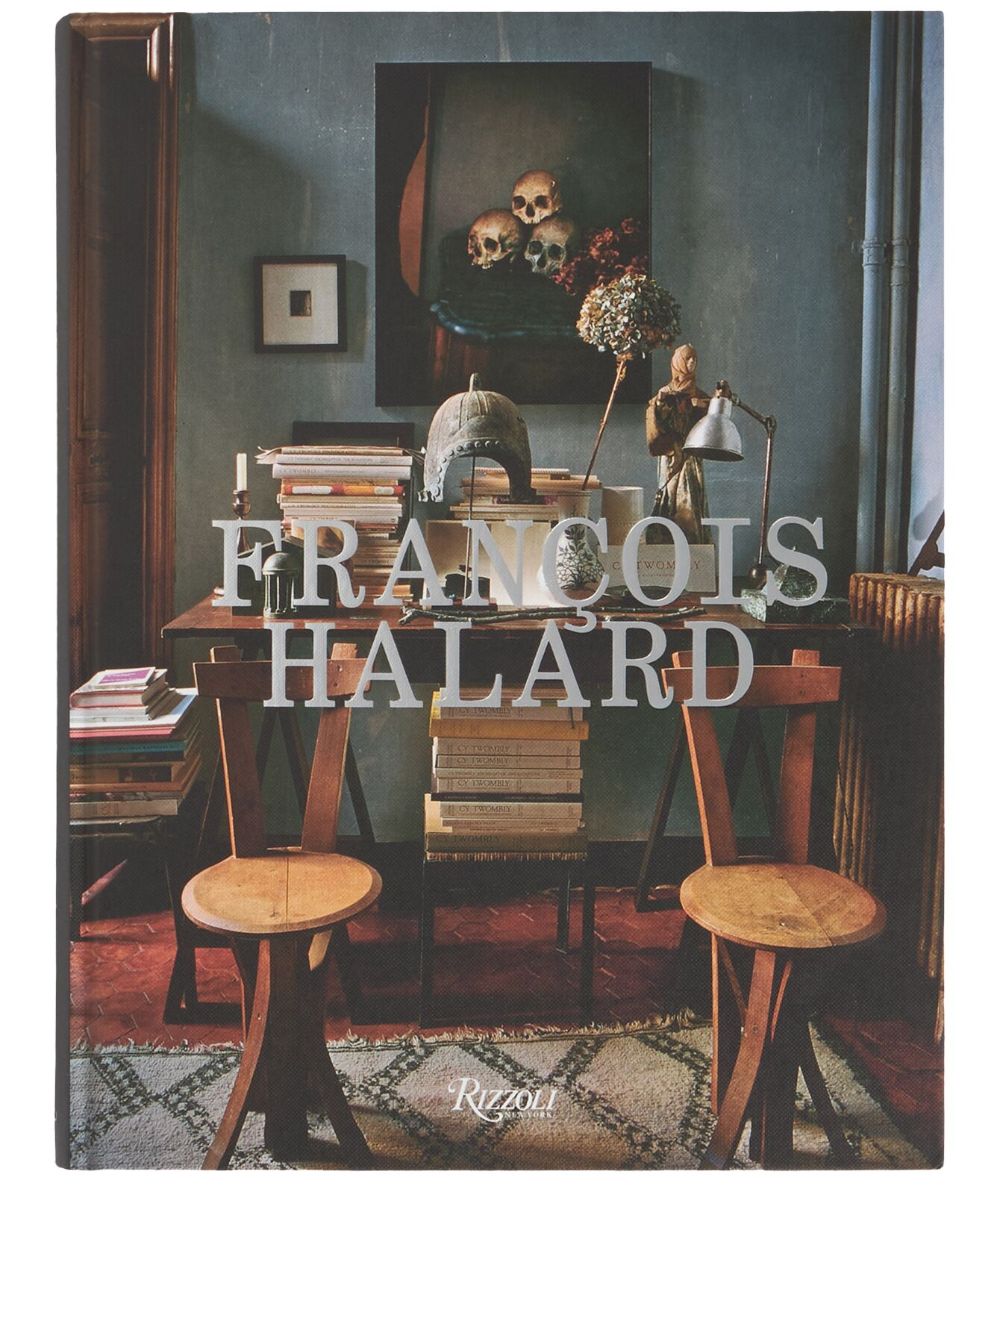 Rizzoli François Halard by François Halard hardcover book - Grigio